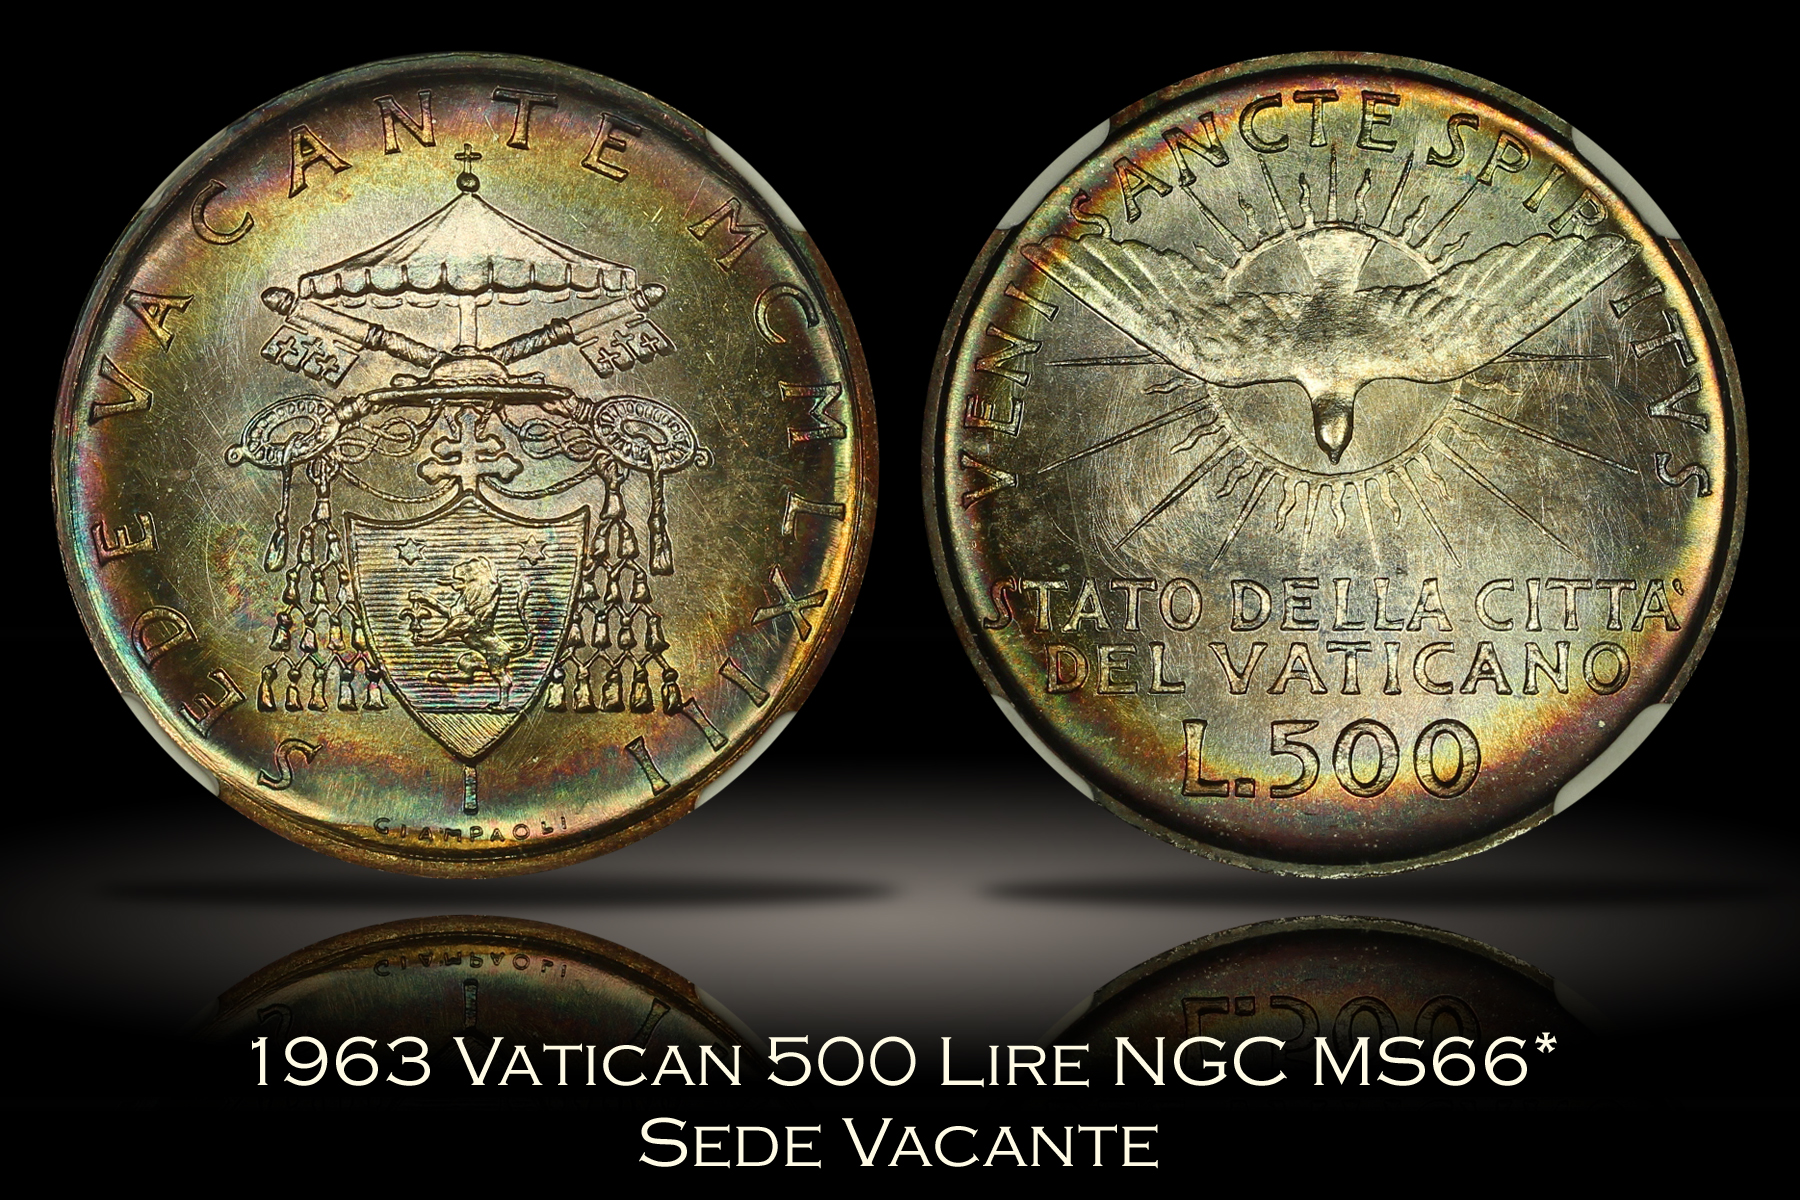 1963 Vatican Sede Vacante 500 Lire NGC MS66*